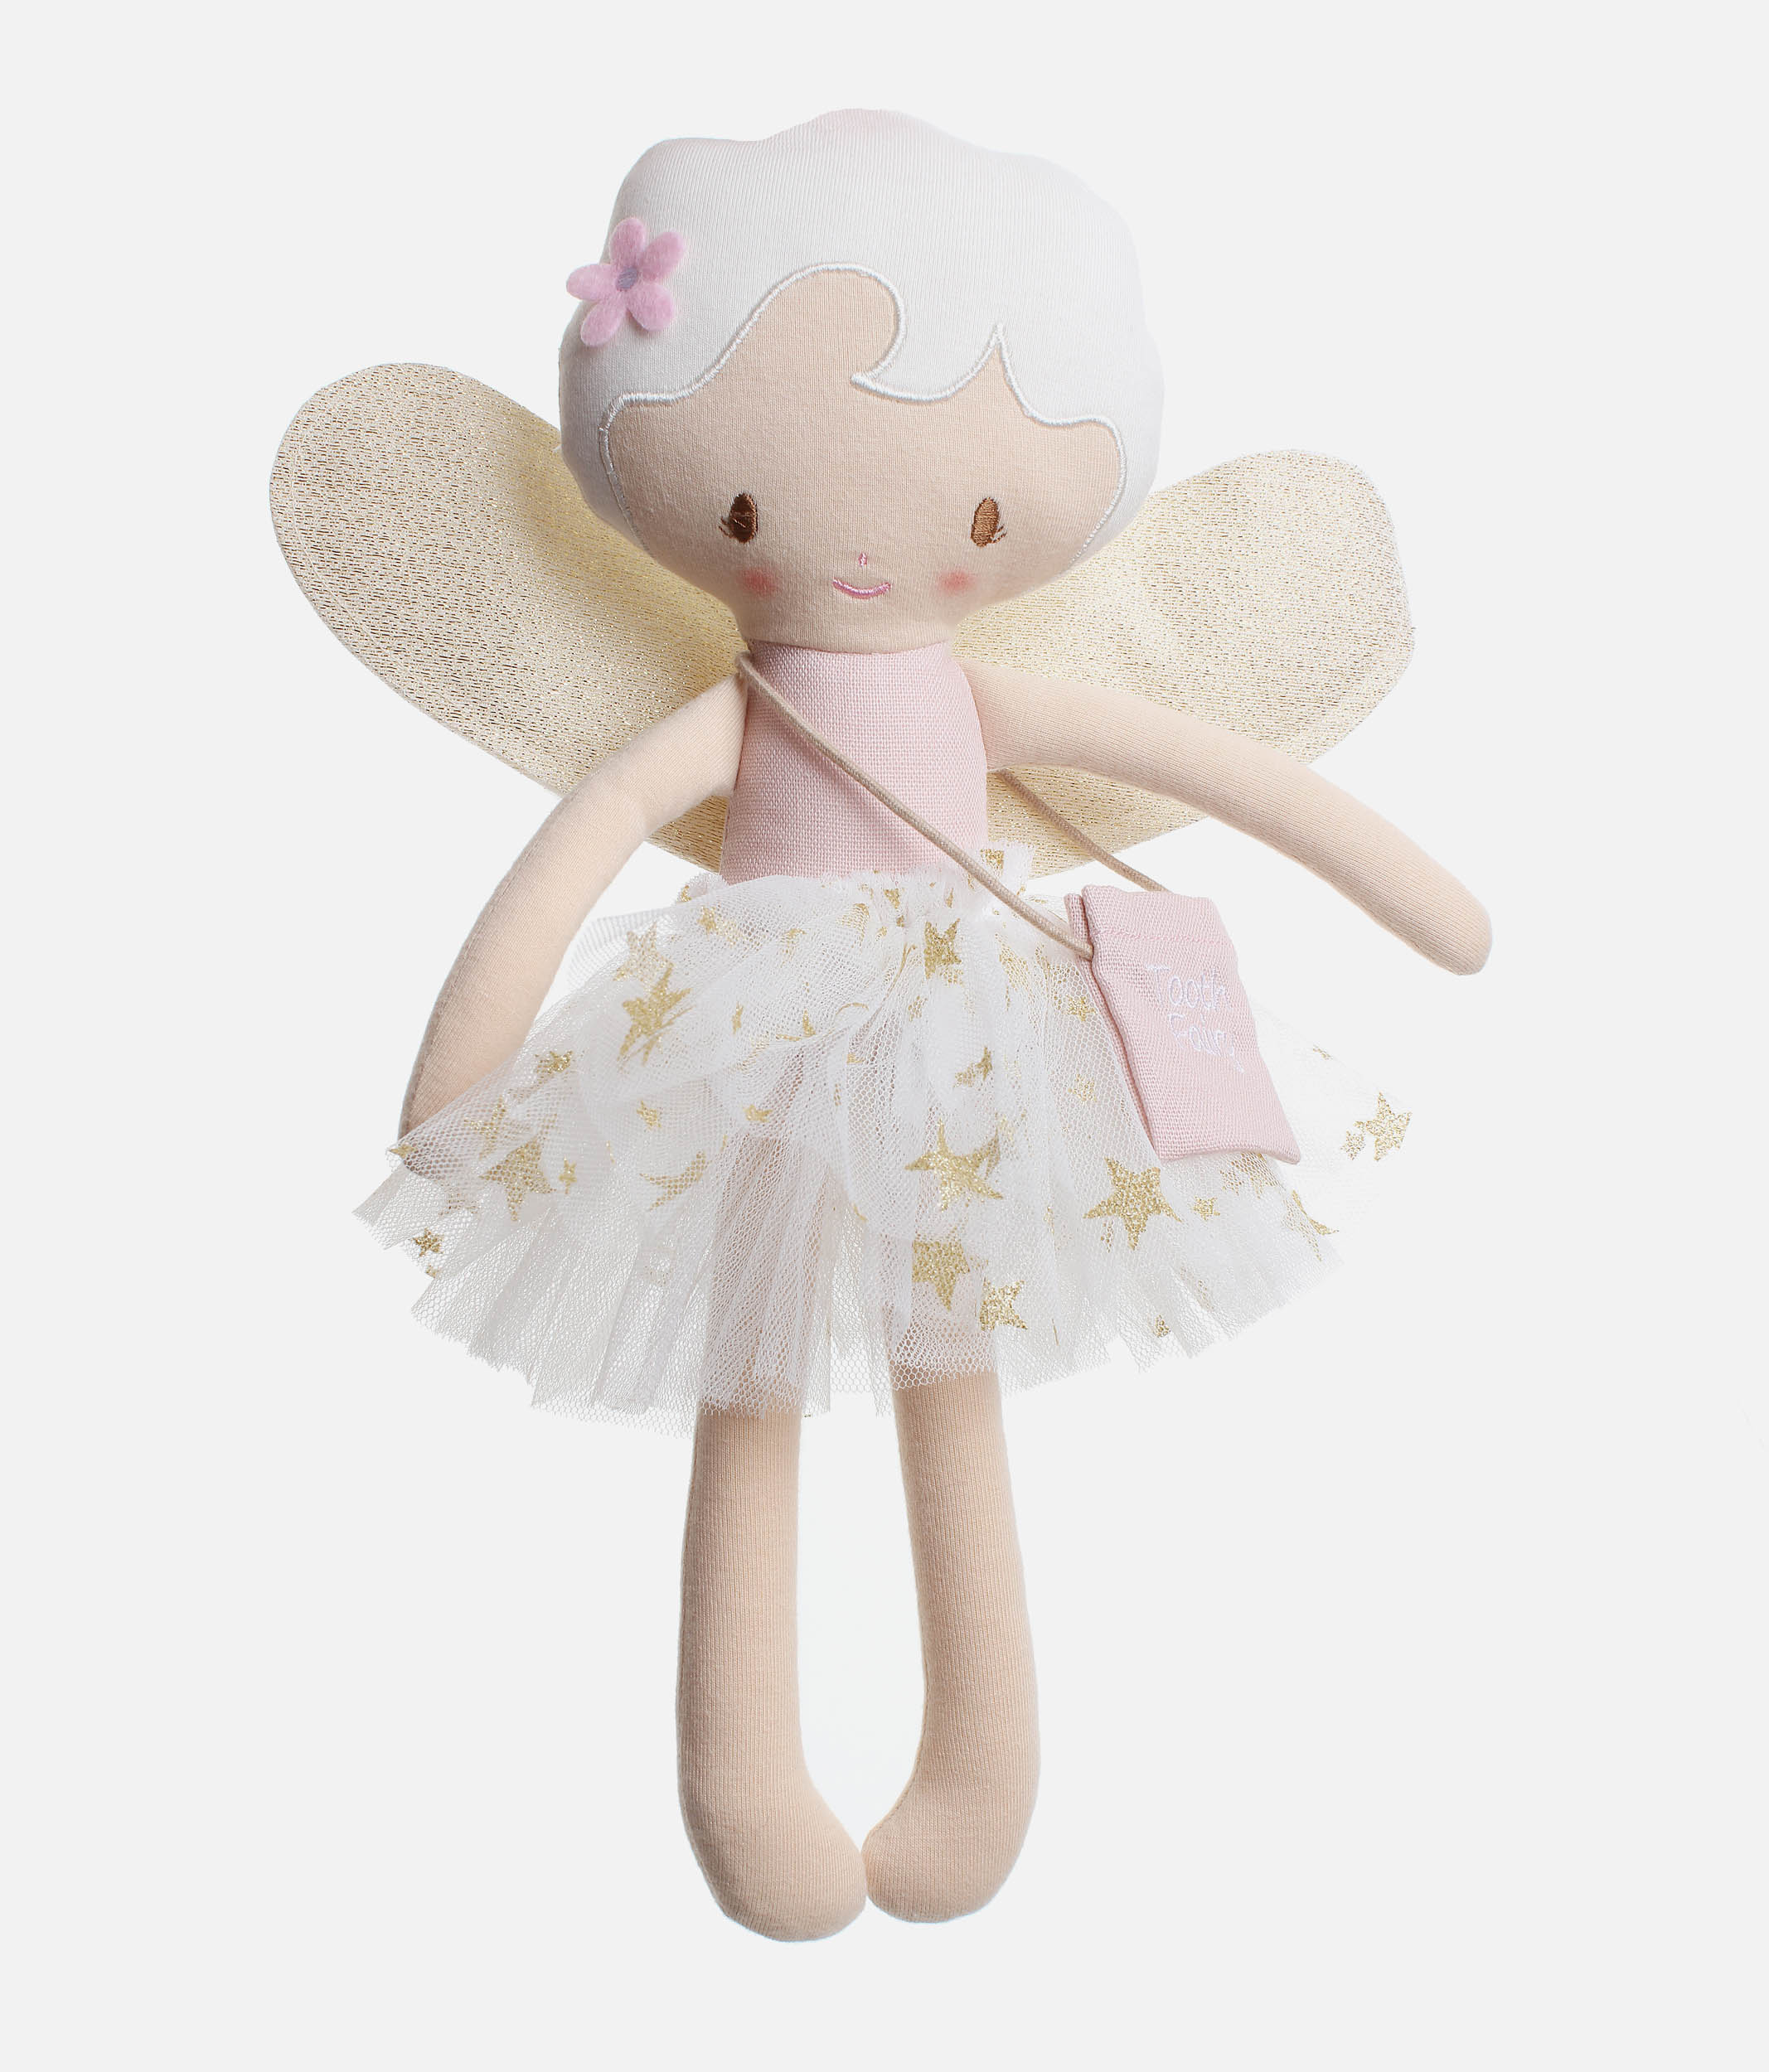 Tilly the Tooth Fairy Doll - N11535IG